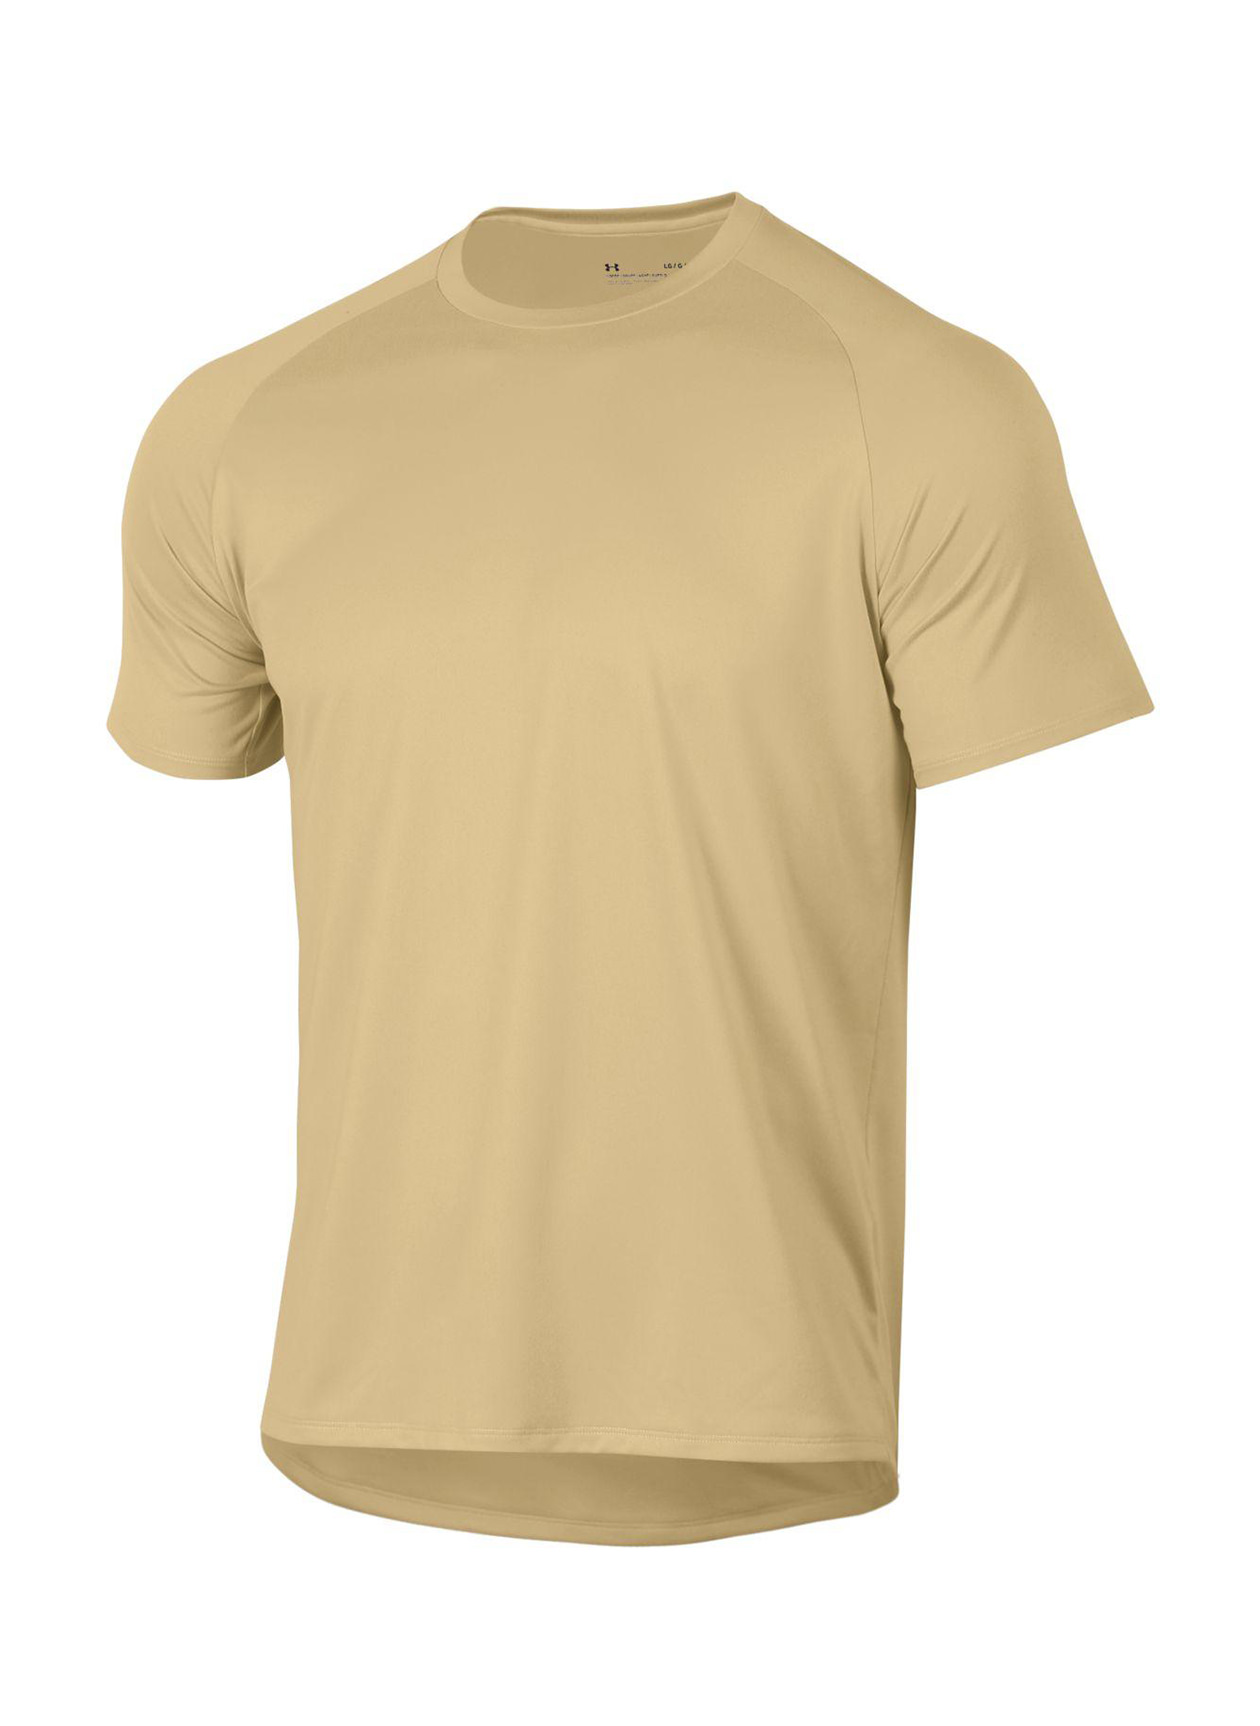 Screen Printed T-shirts  Under Armour Men's Vegas Gold Tech T-Shirt